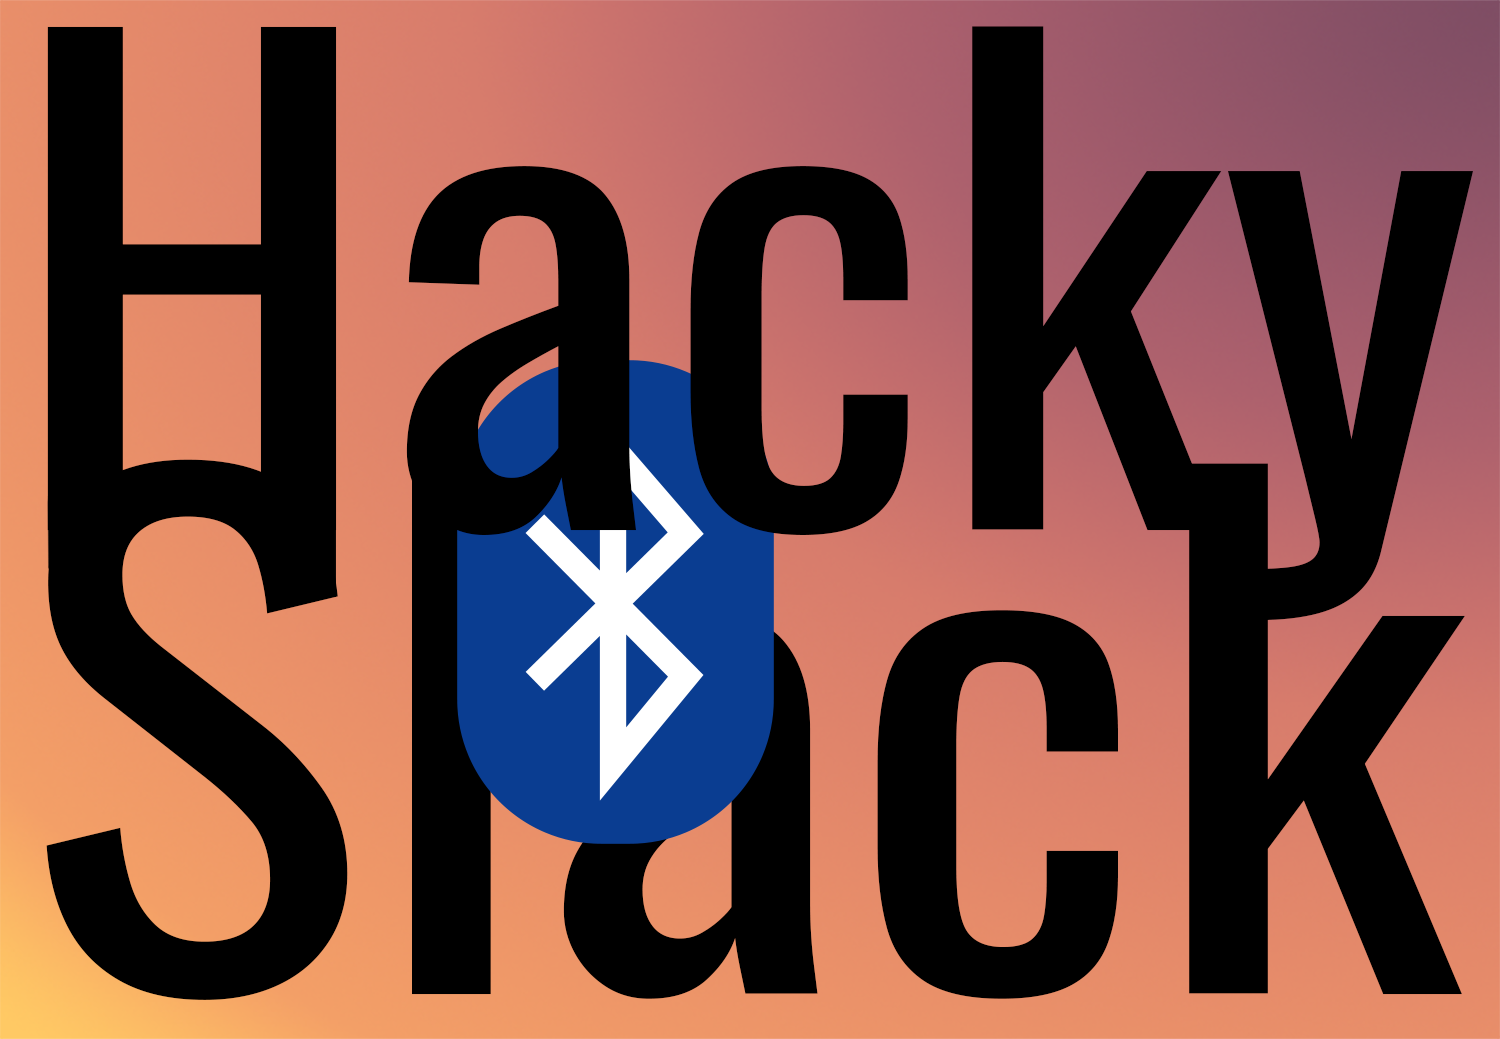 Hacky-Slack and Bluetooth